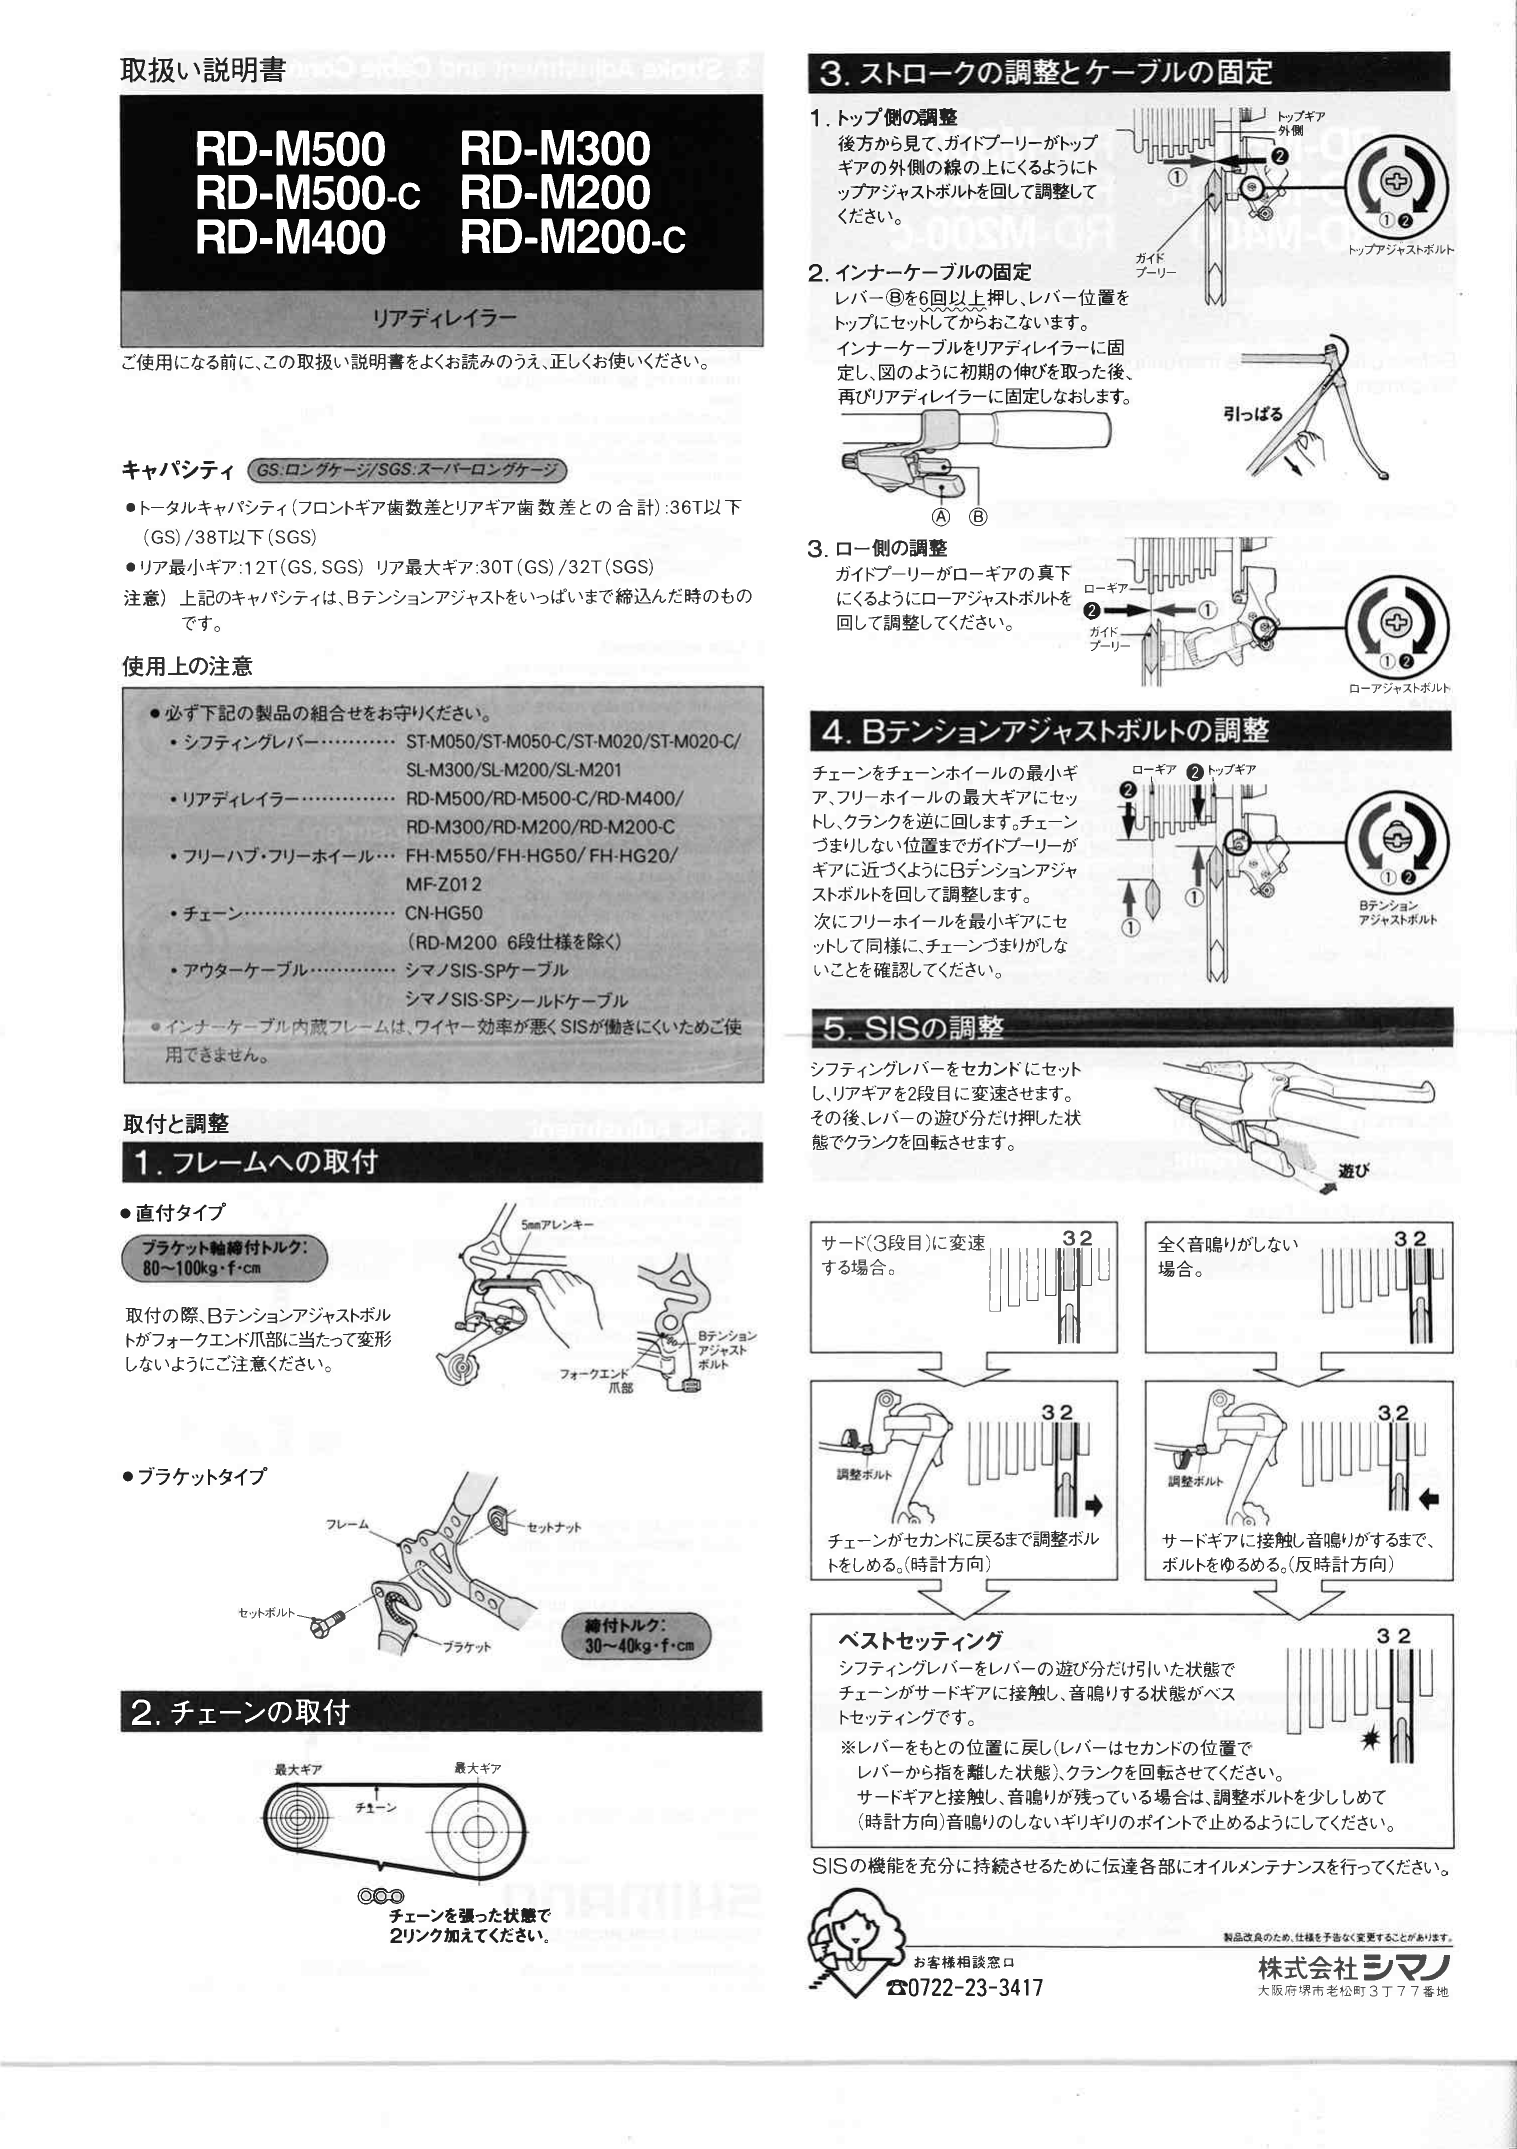 Shimano St M050 St M0 Rd M500 Sl M1 Rd M400 Sl M0 Rd M0 C Rd M0 Sl M300 Rd M300 User Manual Manualzz